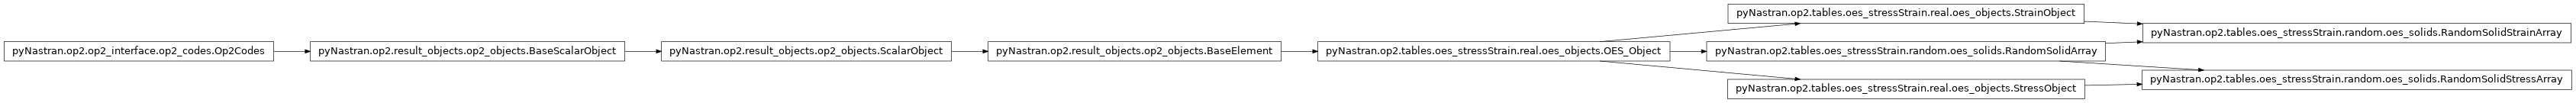 Inheritance diagram of pyNastran.op2.tables.oes_stressStrain.random.oes_solids